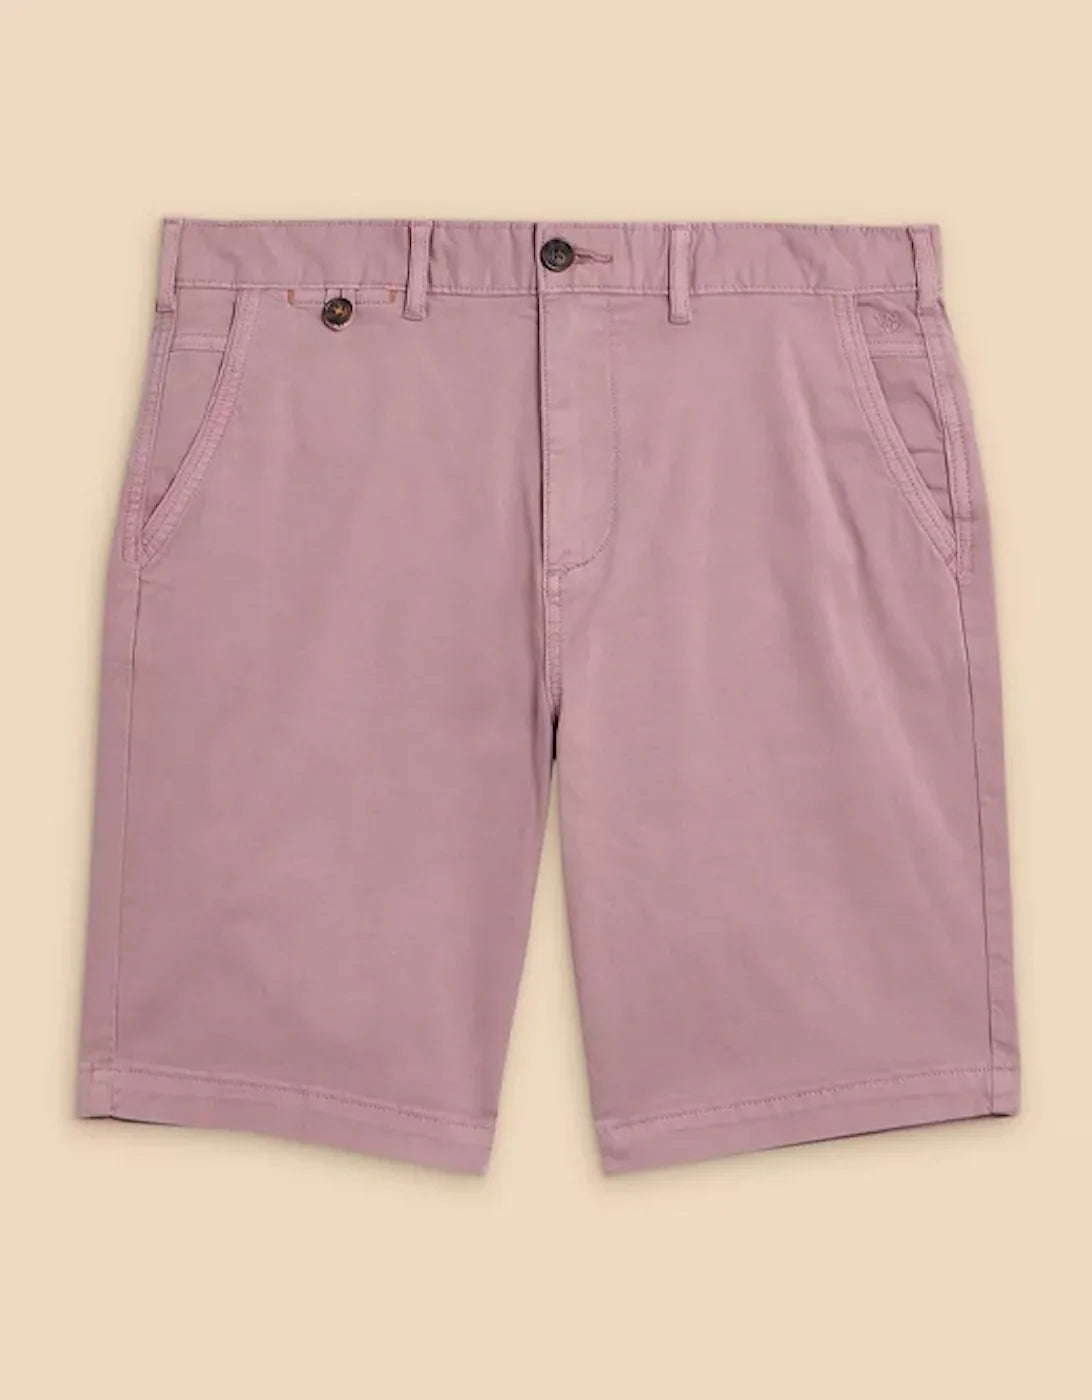 White Stuff Sutton Organic Chino Shorts in Dusky Pink